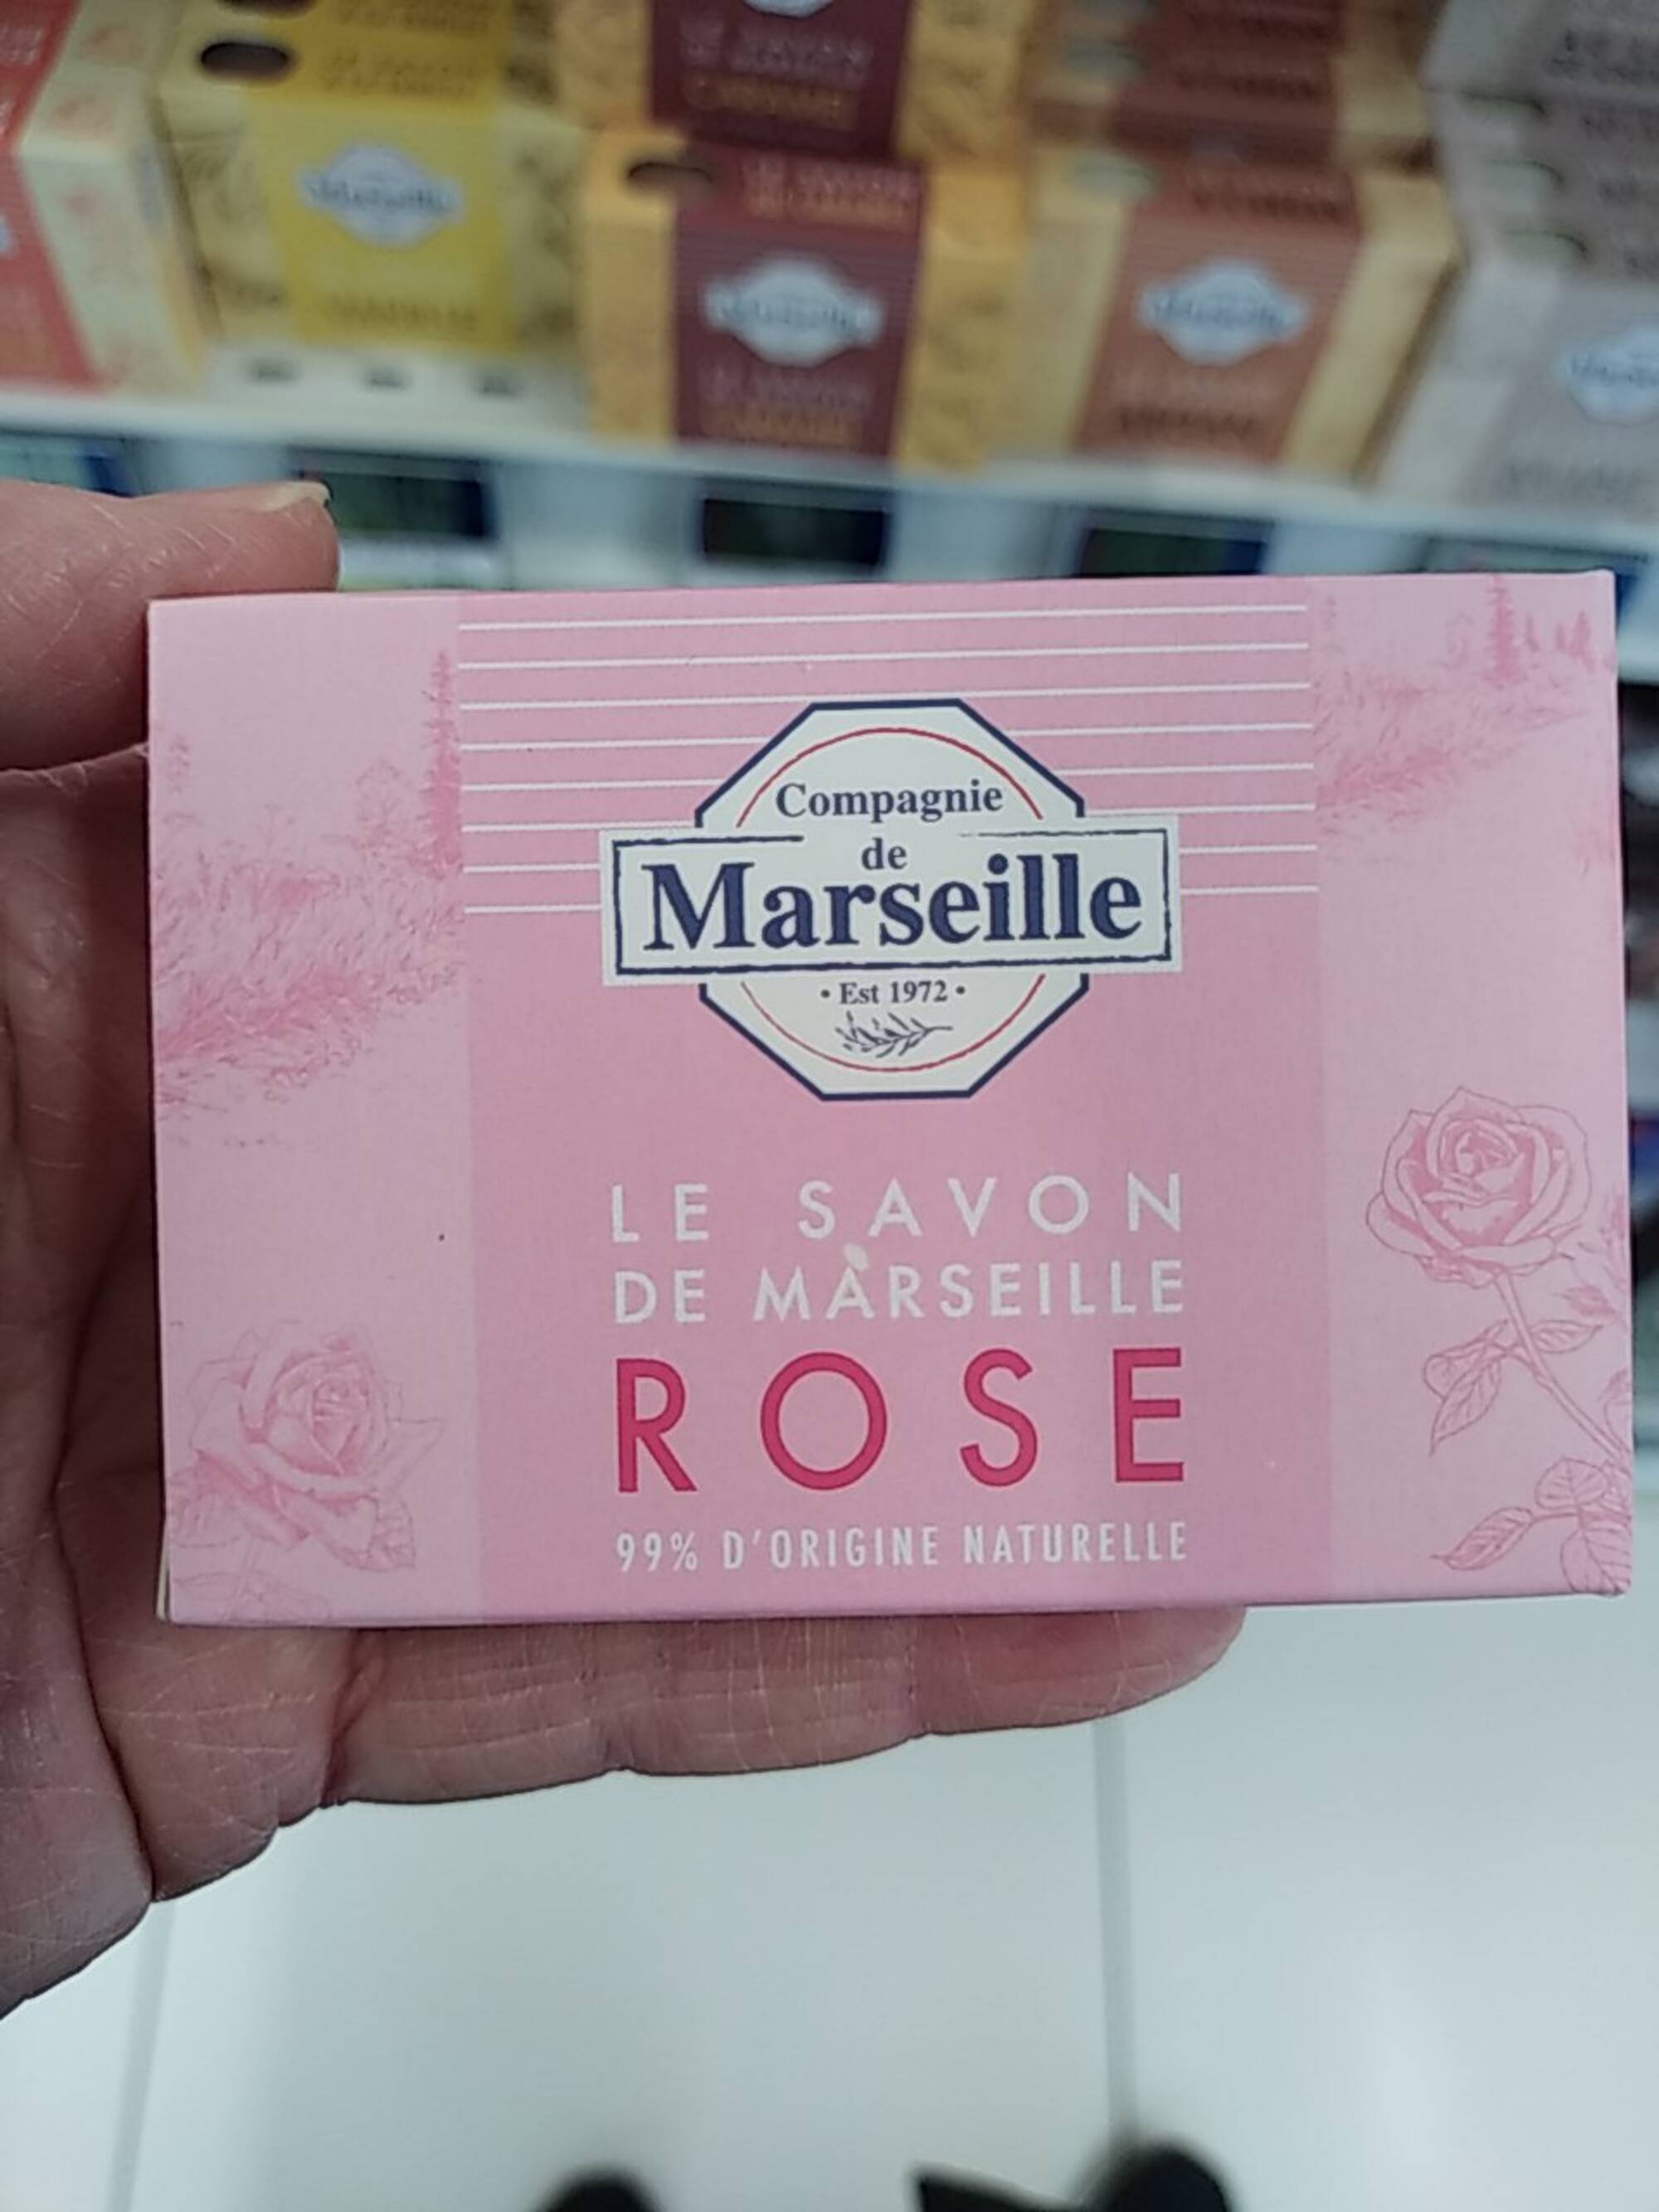 COMPAGNIE DE MARSEILLE - Rose - Le savon de Marseille 